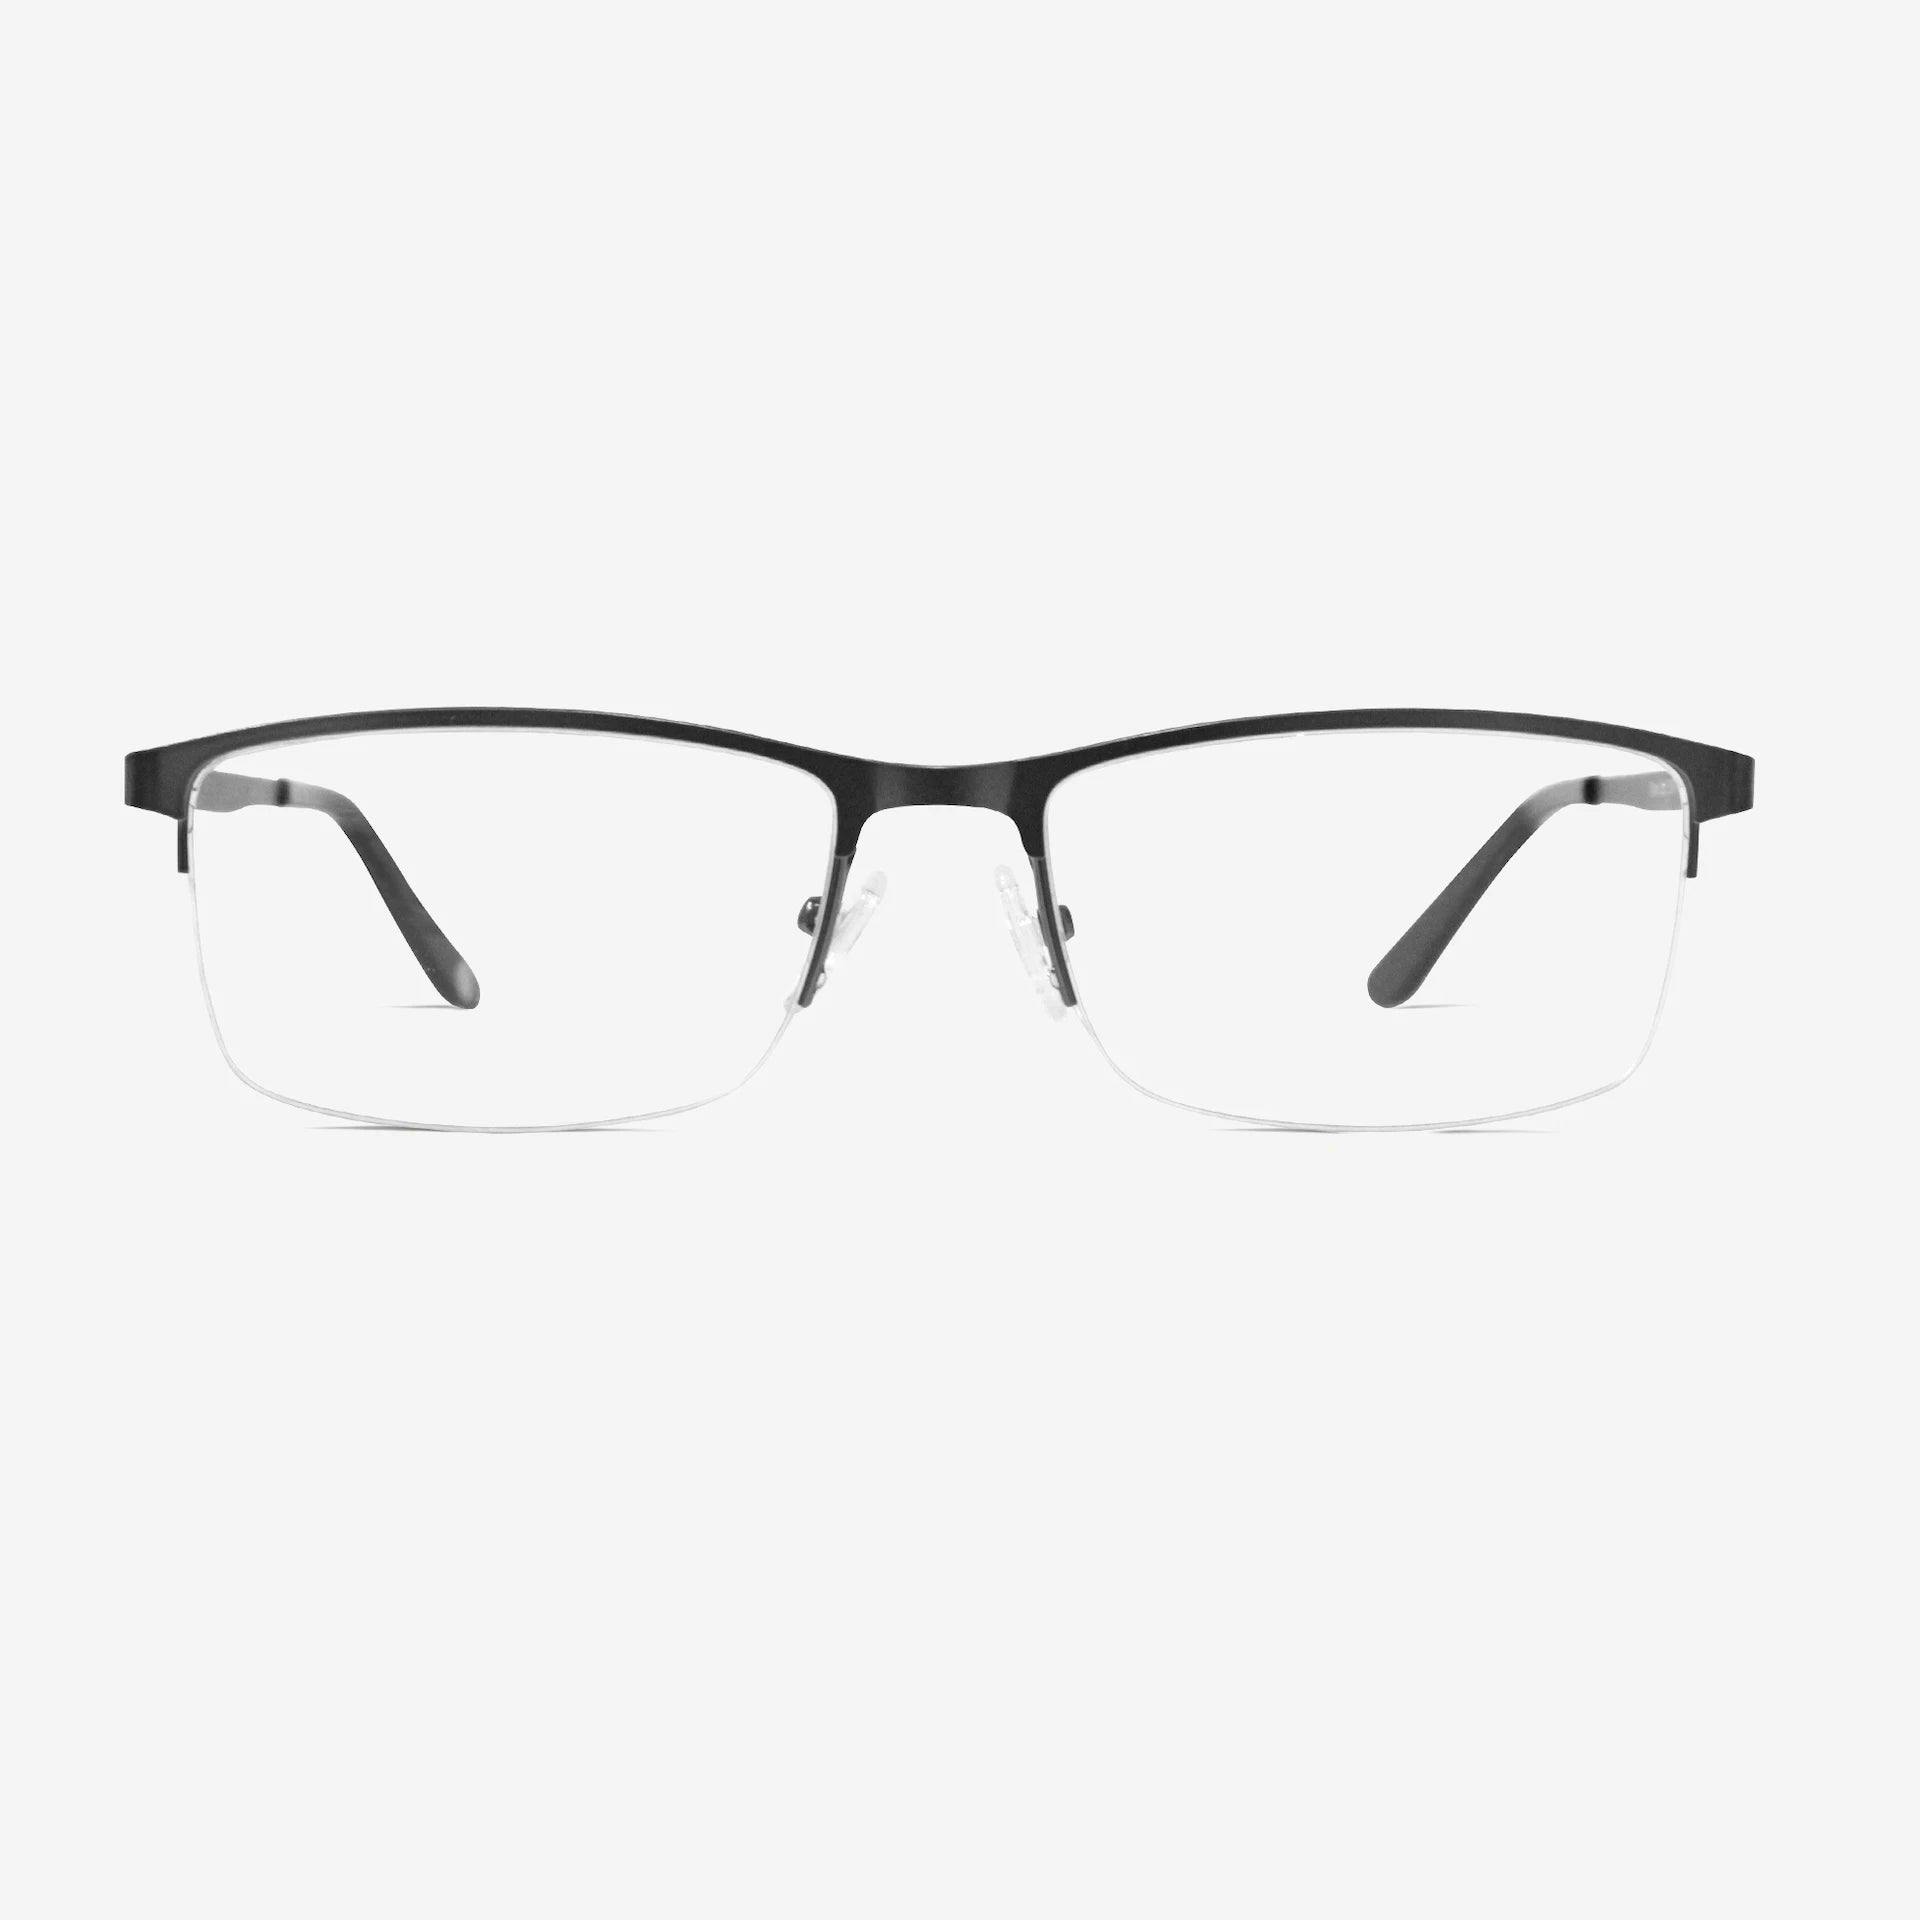 Huxley glasses | Croix Silver 